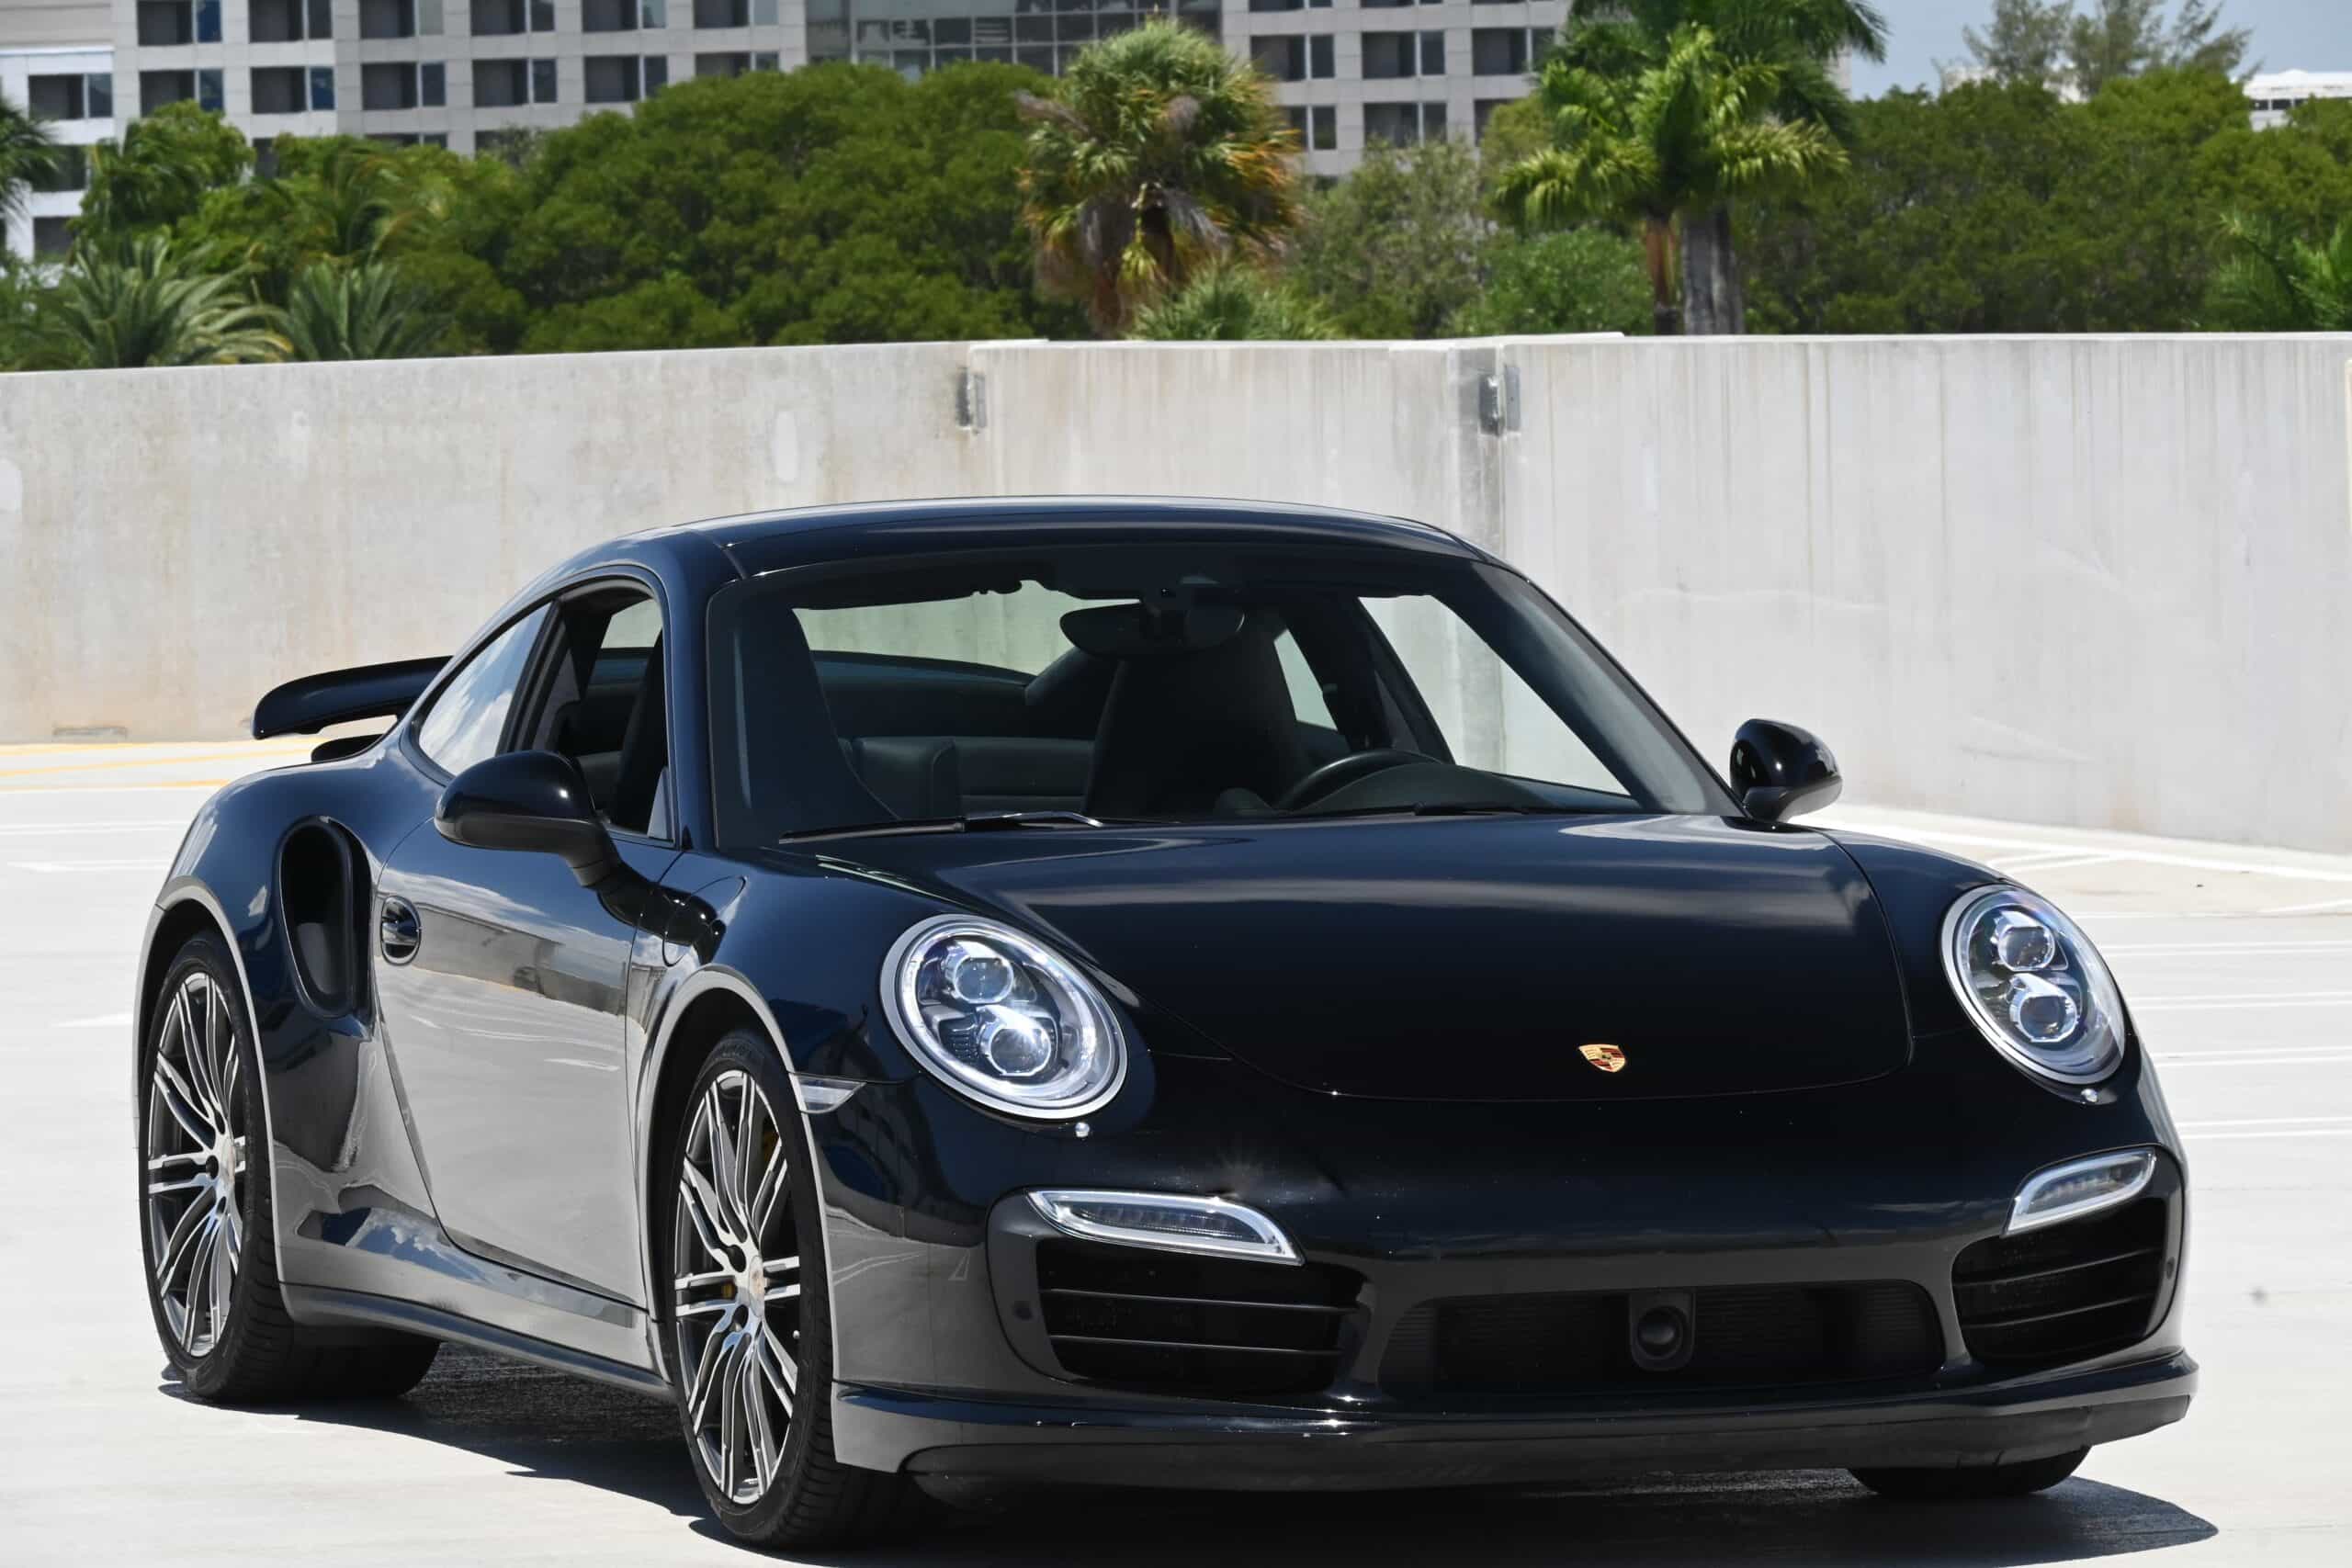 2014 Porsche 911 991 Turbo S 1 OWNER- Original Paint – Fully Loaded- $188k Window sticker-Serviced- 32k Miles Carbon Ceramic Brakes